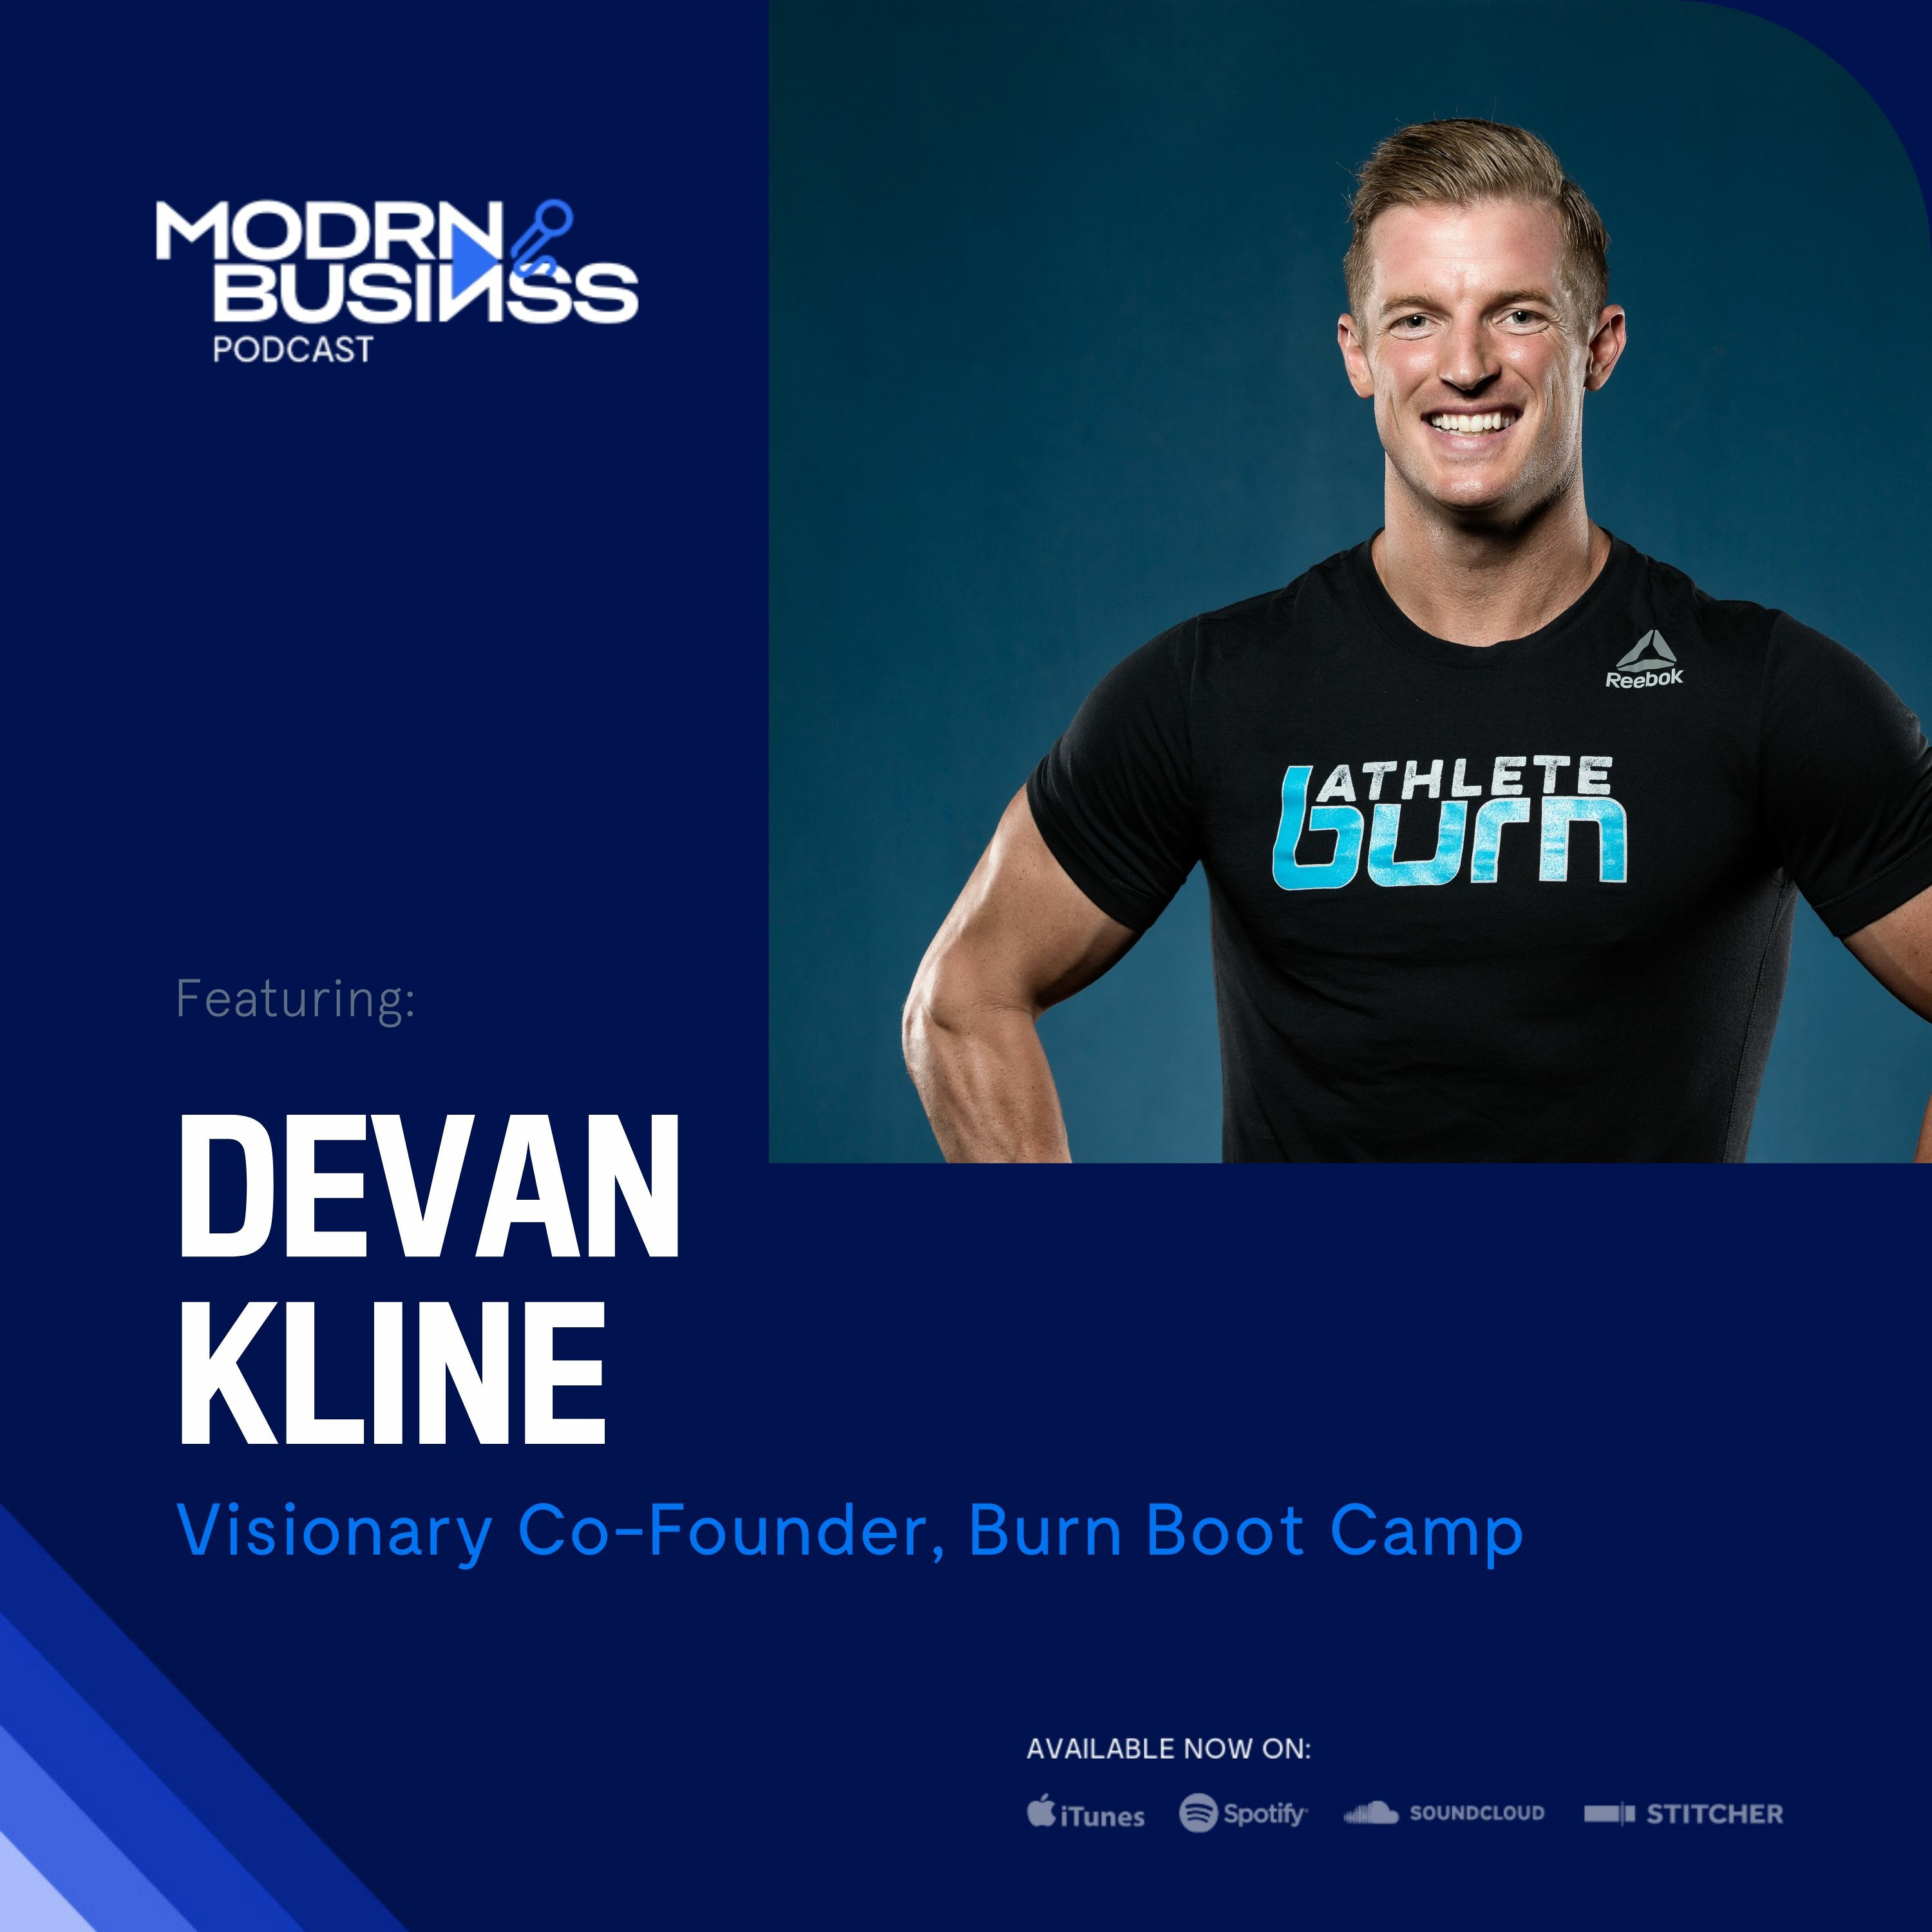 Devan Kline, Visionary Co-Founder of Burn Boot Camp